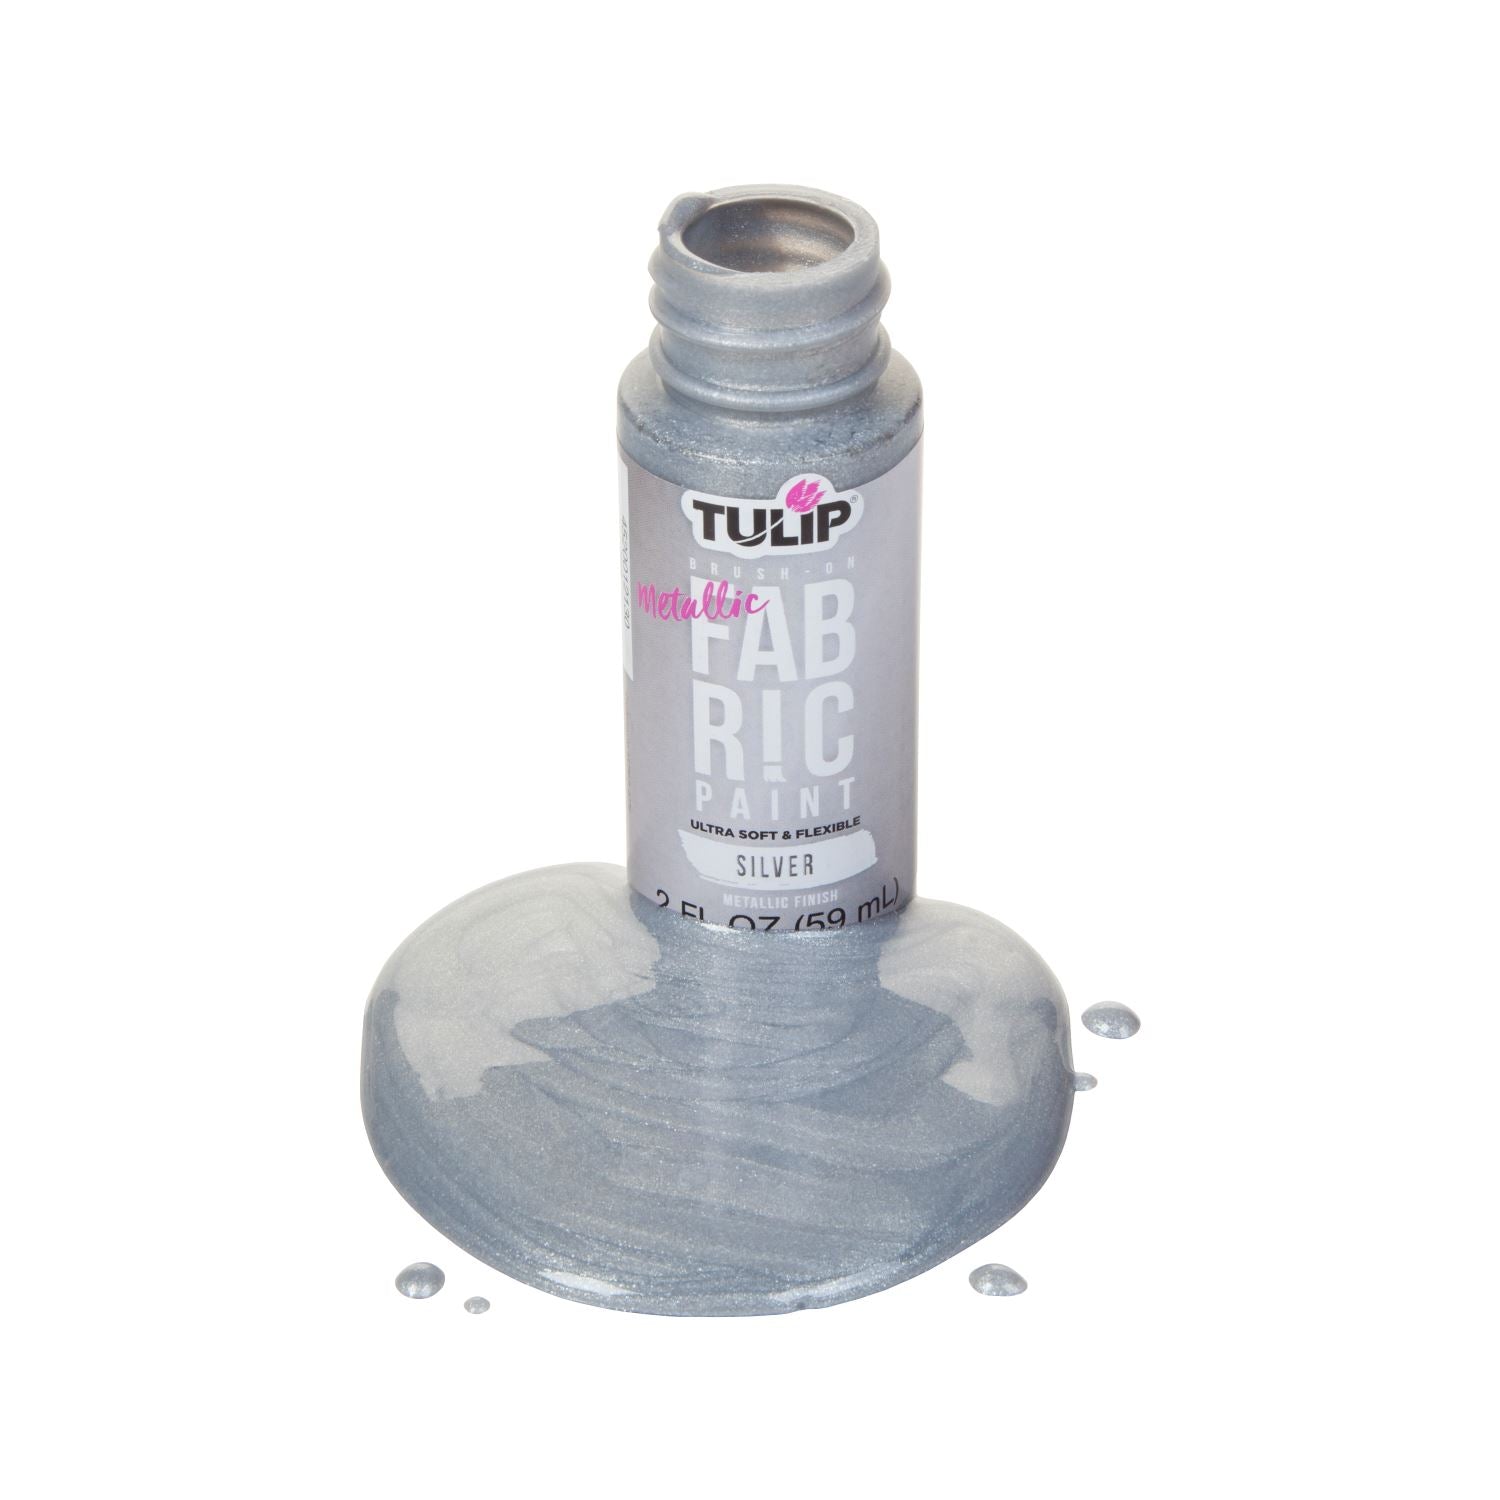 Tulip Brush-On Fabric Paint Silver Metallic 2 fl. oz. – Tulip Color Crafts